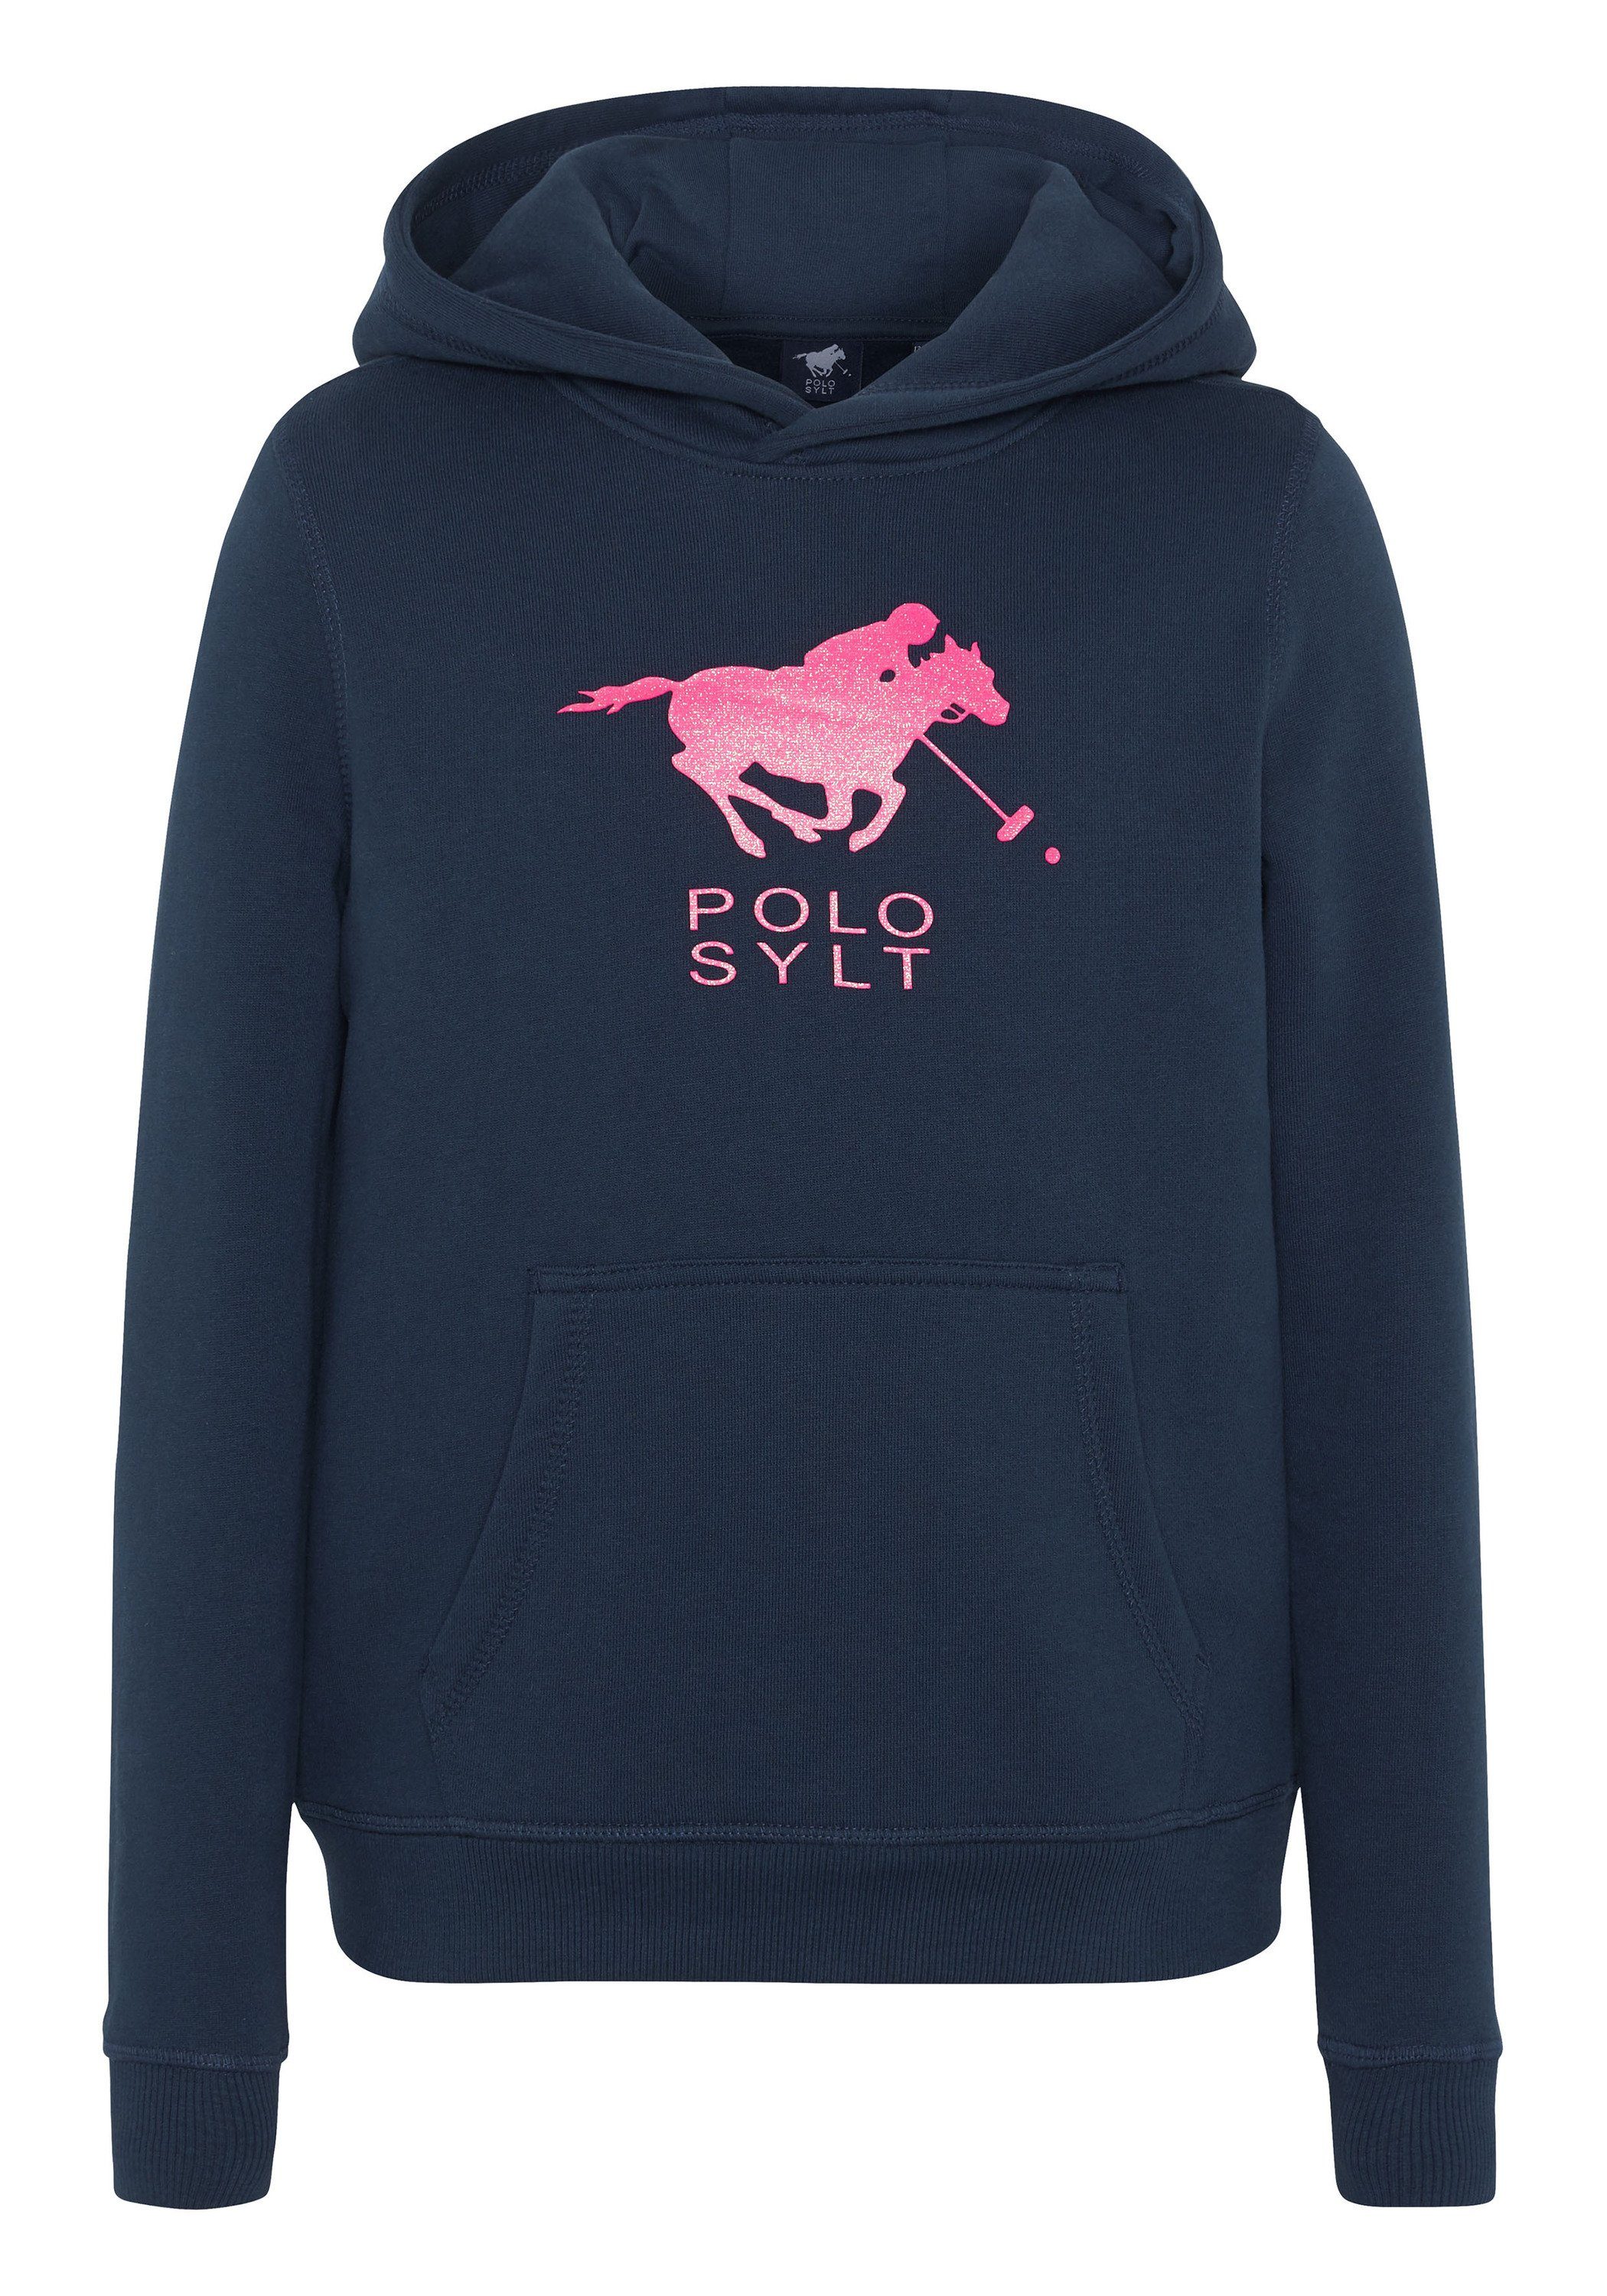 Polo Eclipse Total Sylt Sweatshirt mit glitzerndem Label-Motiv